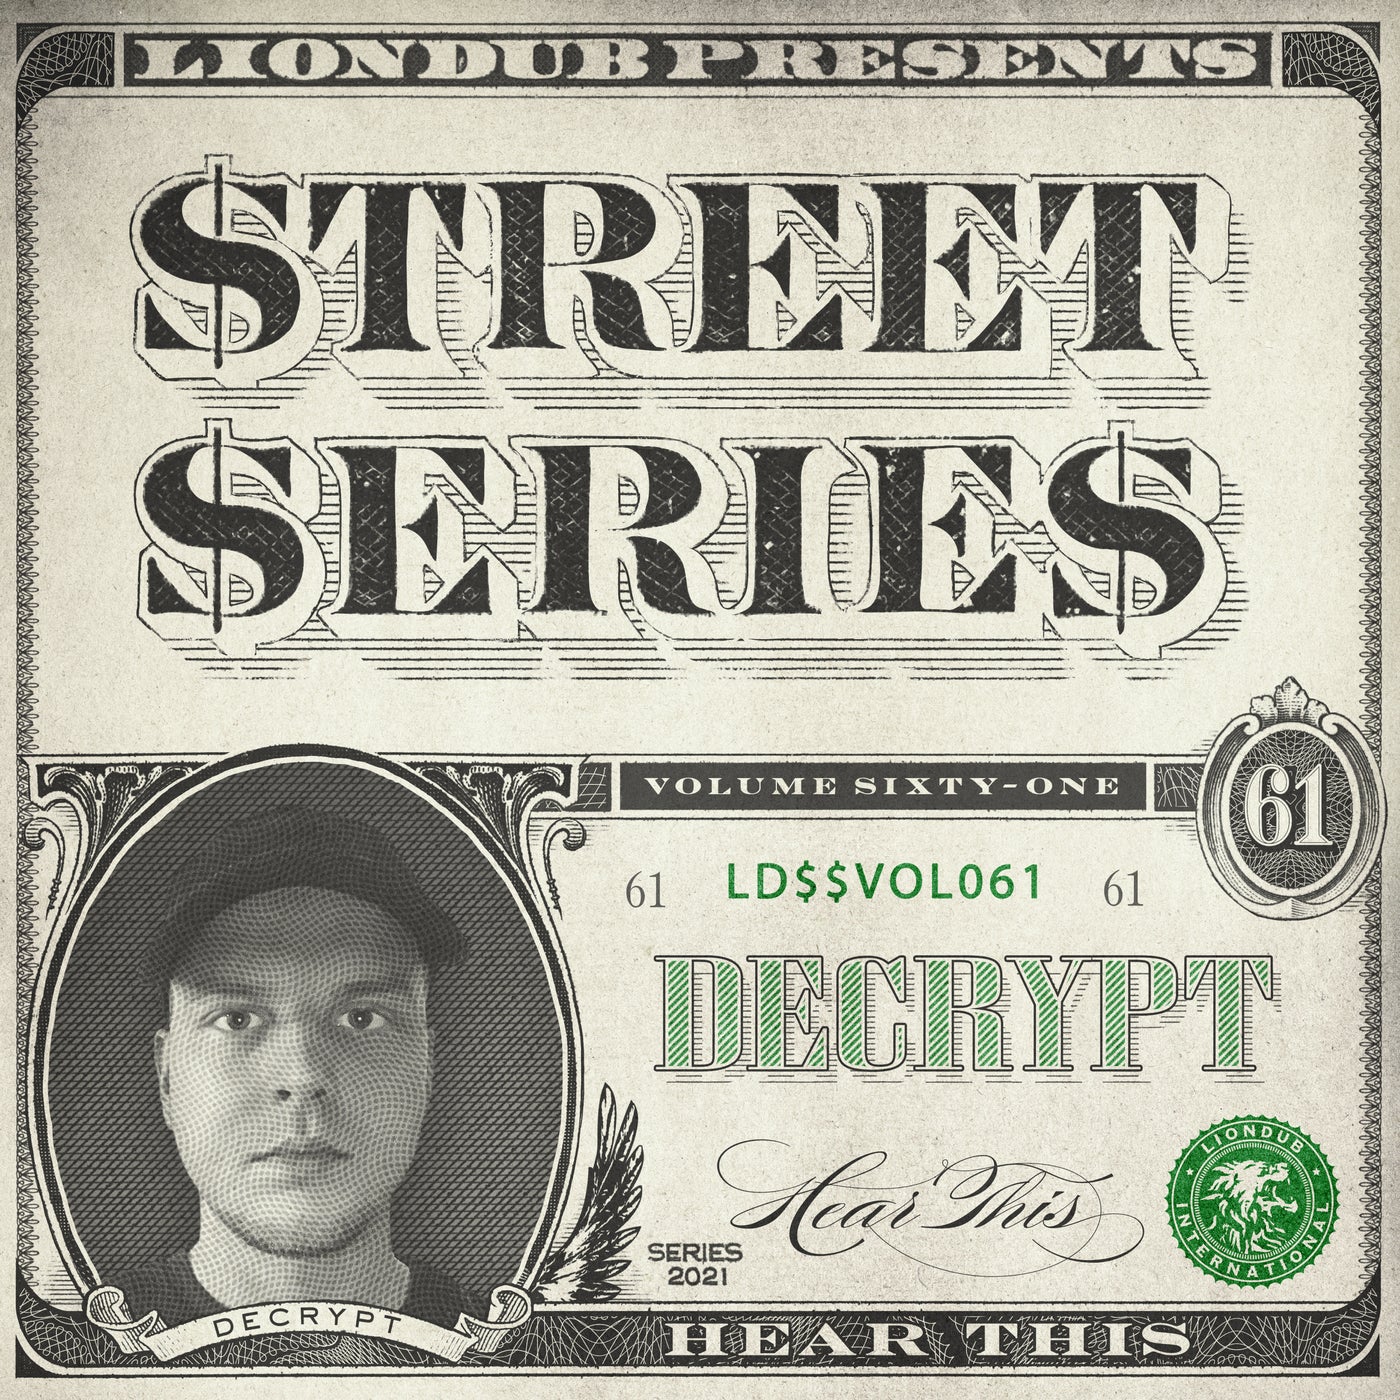 Liondub Street Series, Vol. 61: Hear This